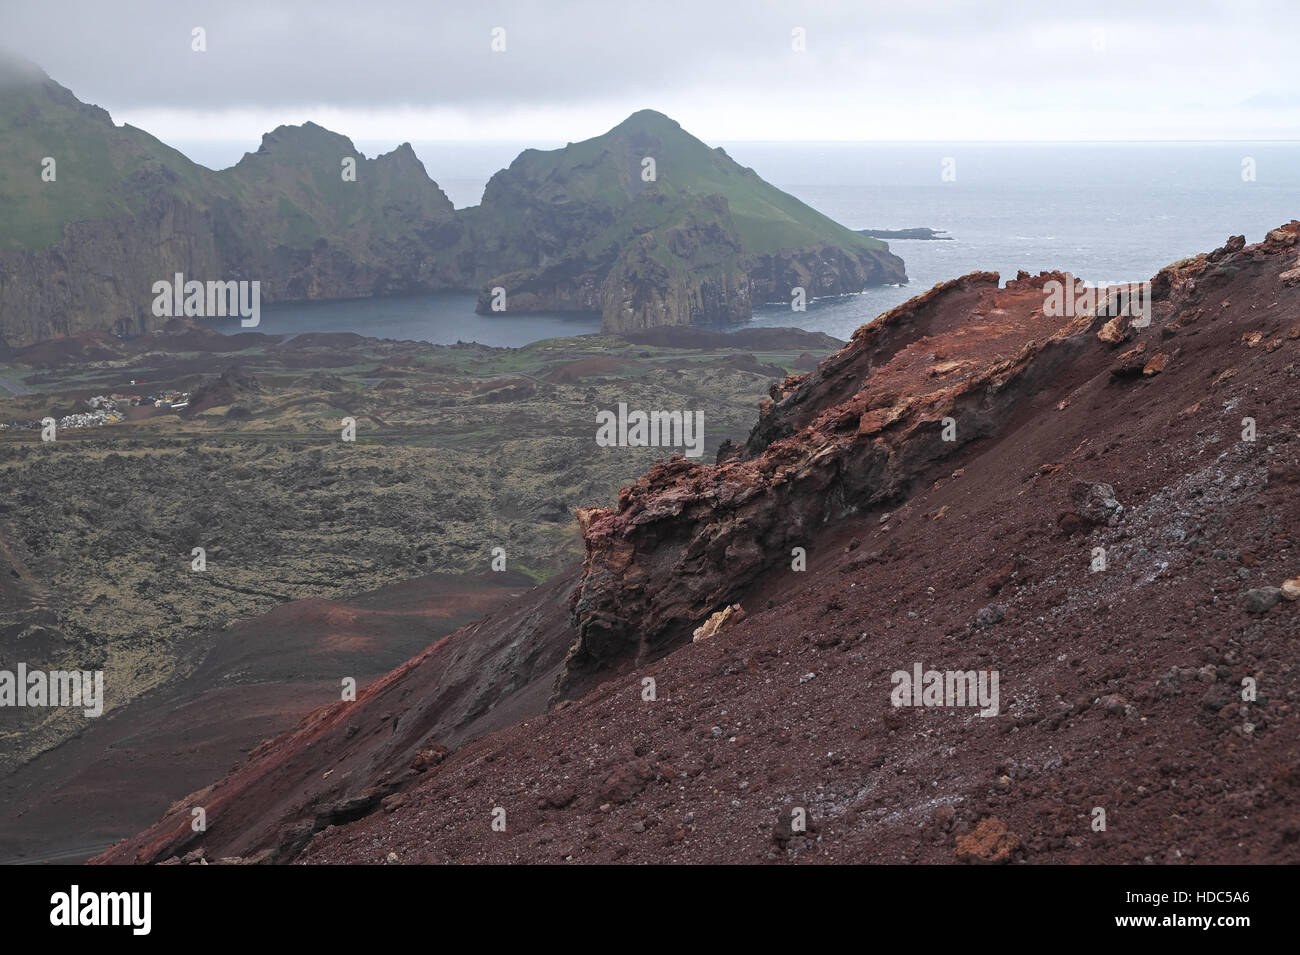 Part of Heimaey (left) seen over volcanic rocks and lava field from flanks of Eldfell, Heimaey, Vestmannaeyjar Islands, Iceland. Stock Photo